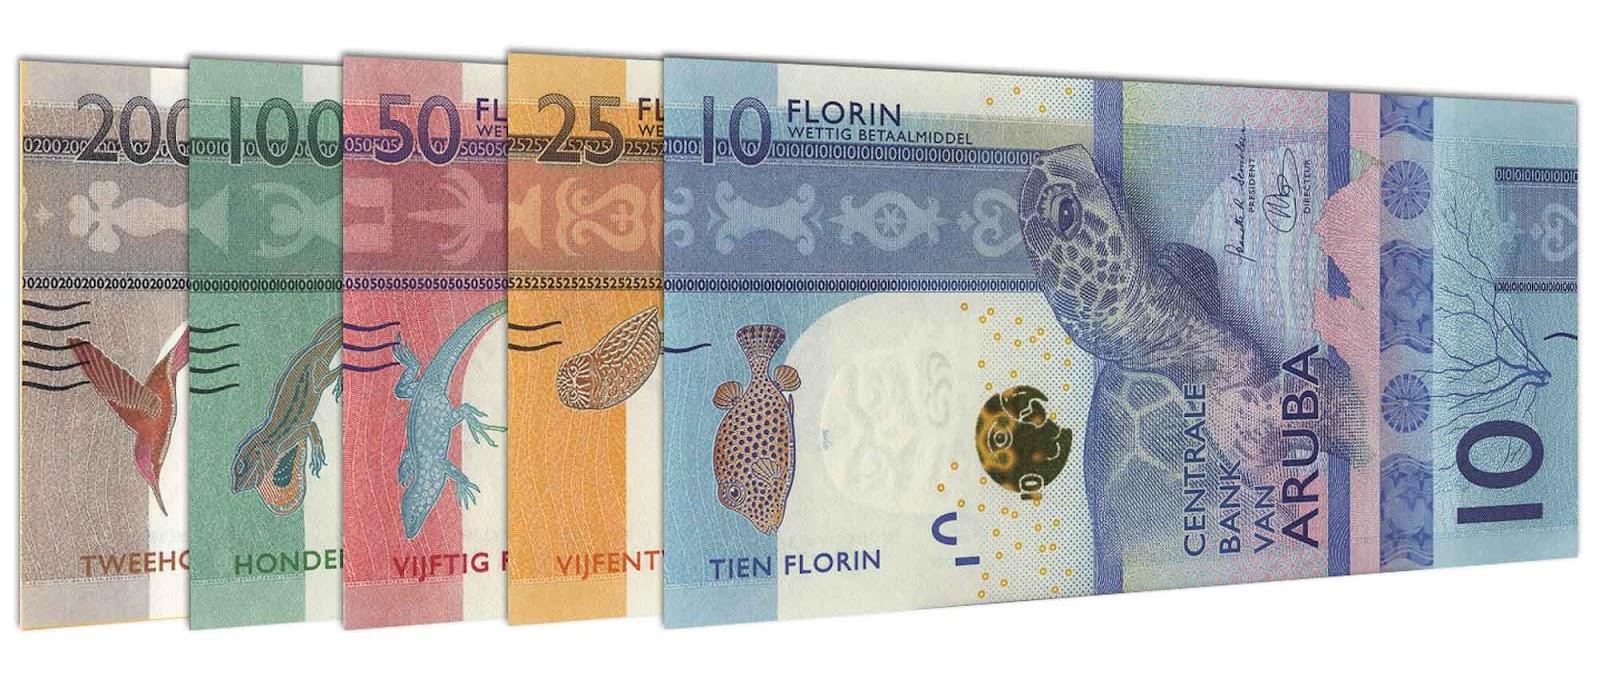 Aruban Florin banknote series